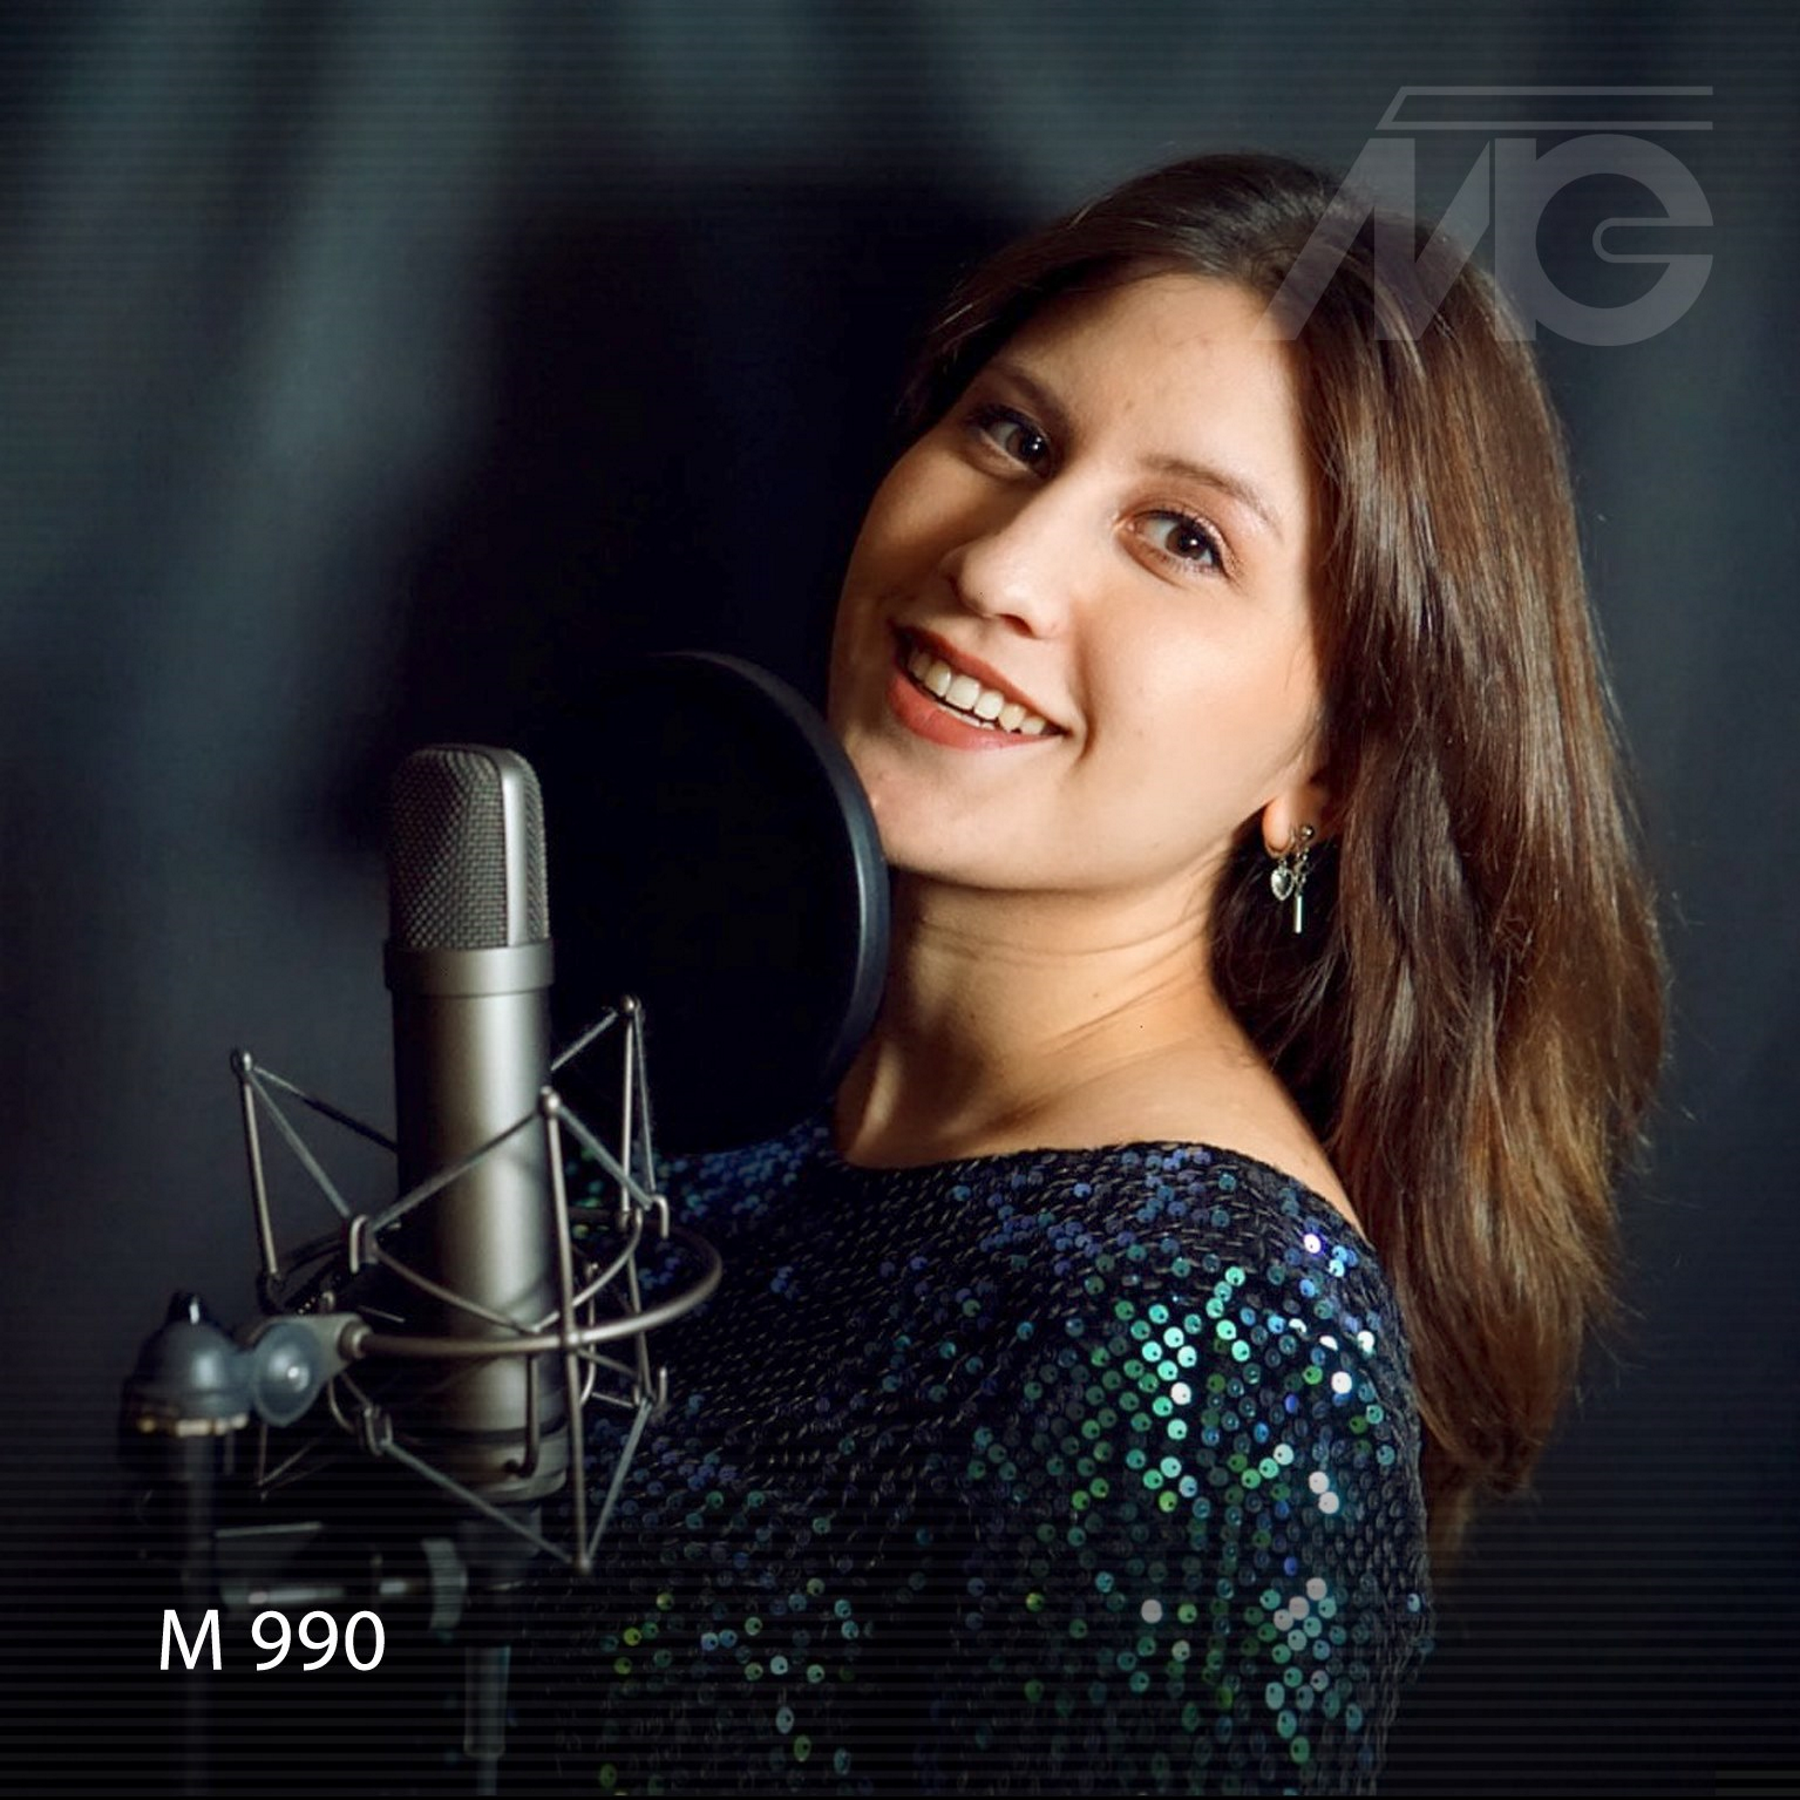 Microphone d'enregistrement - M 990 - Microtech Gefell GmbH - de